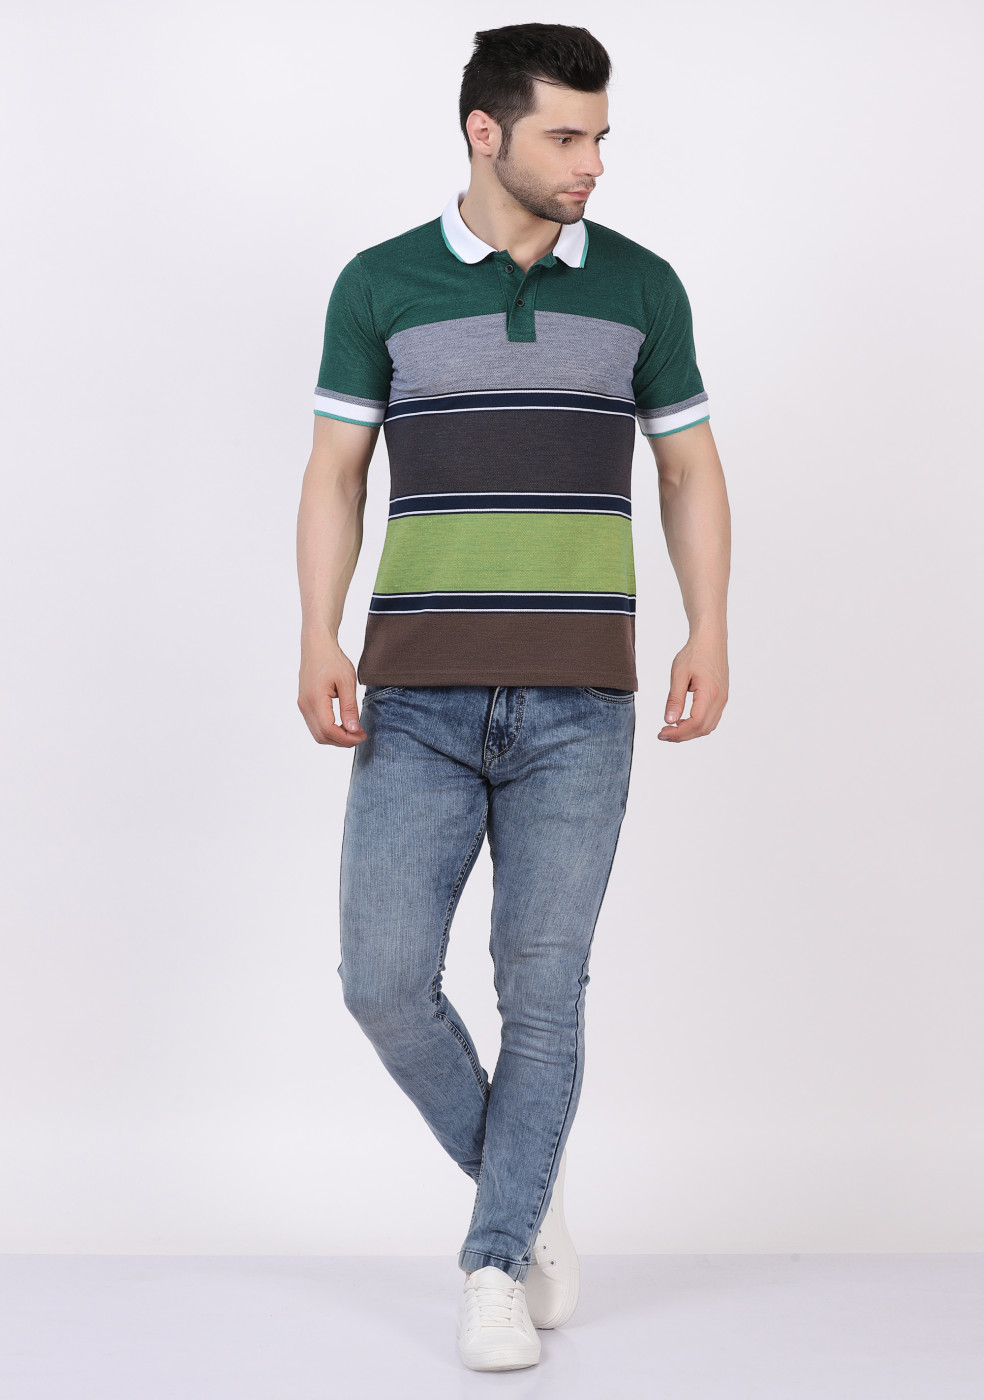 Striped Matty Cotton Collar Slim Fit Polo T-Shirt For Men